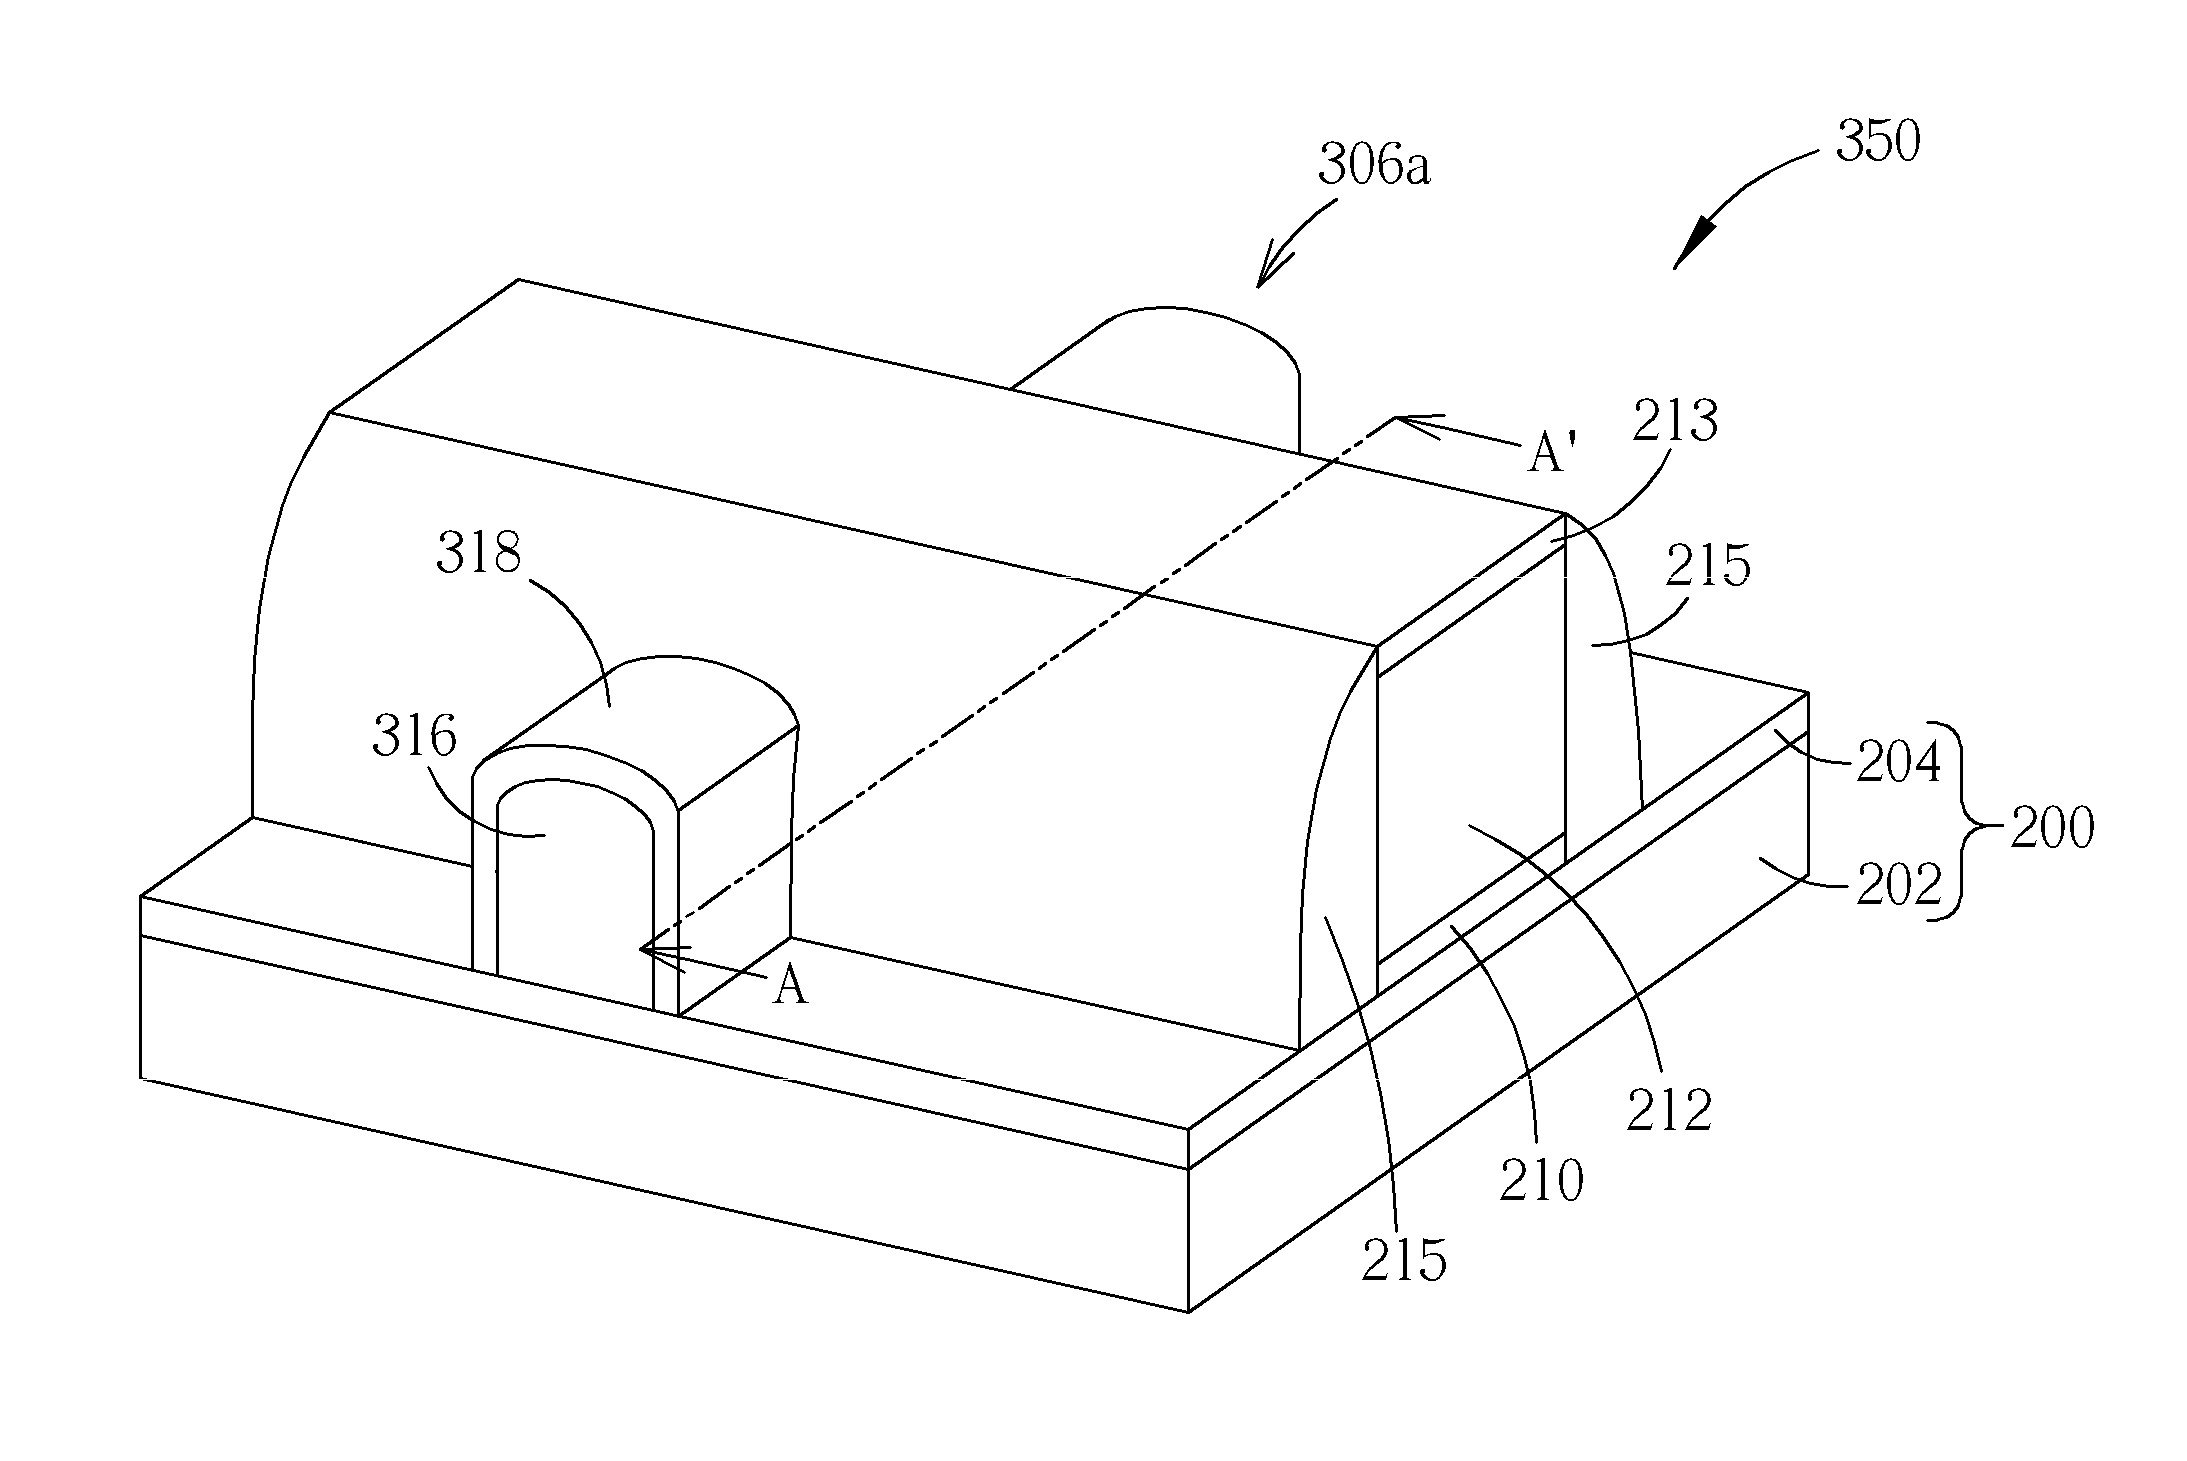 Method for manufacturing multi-gate transistor device